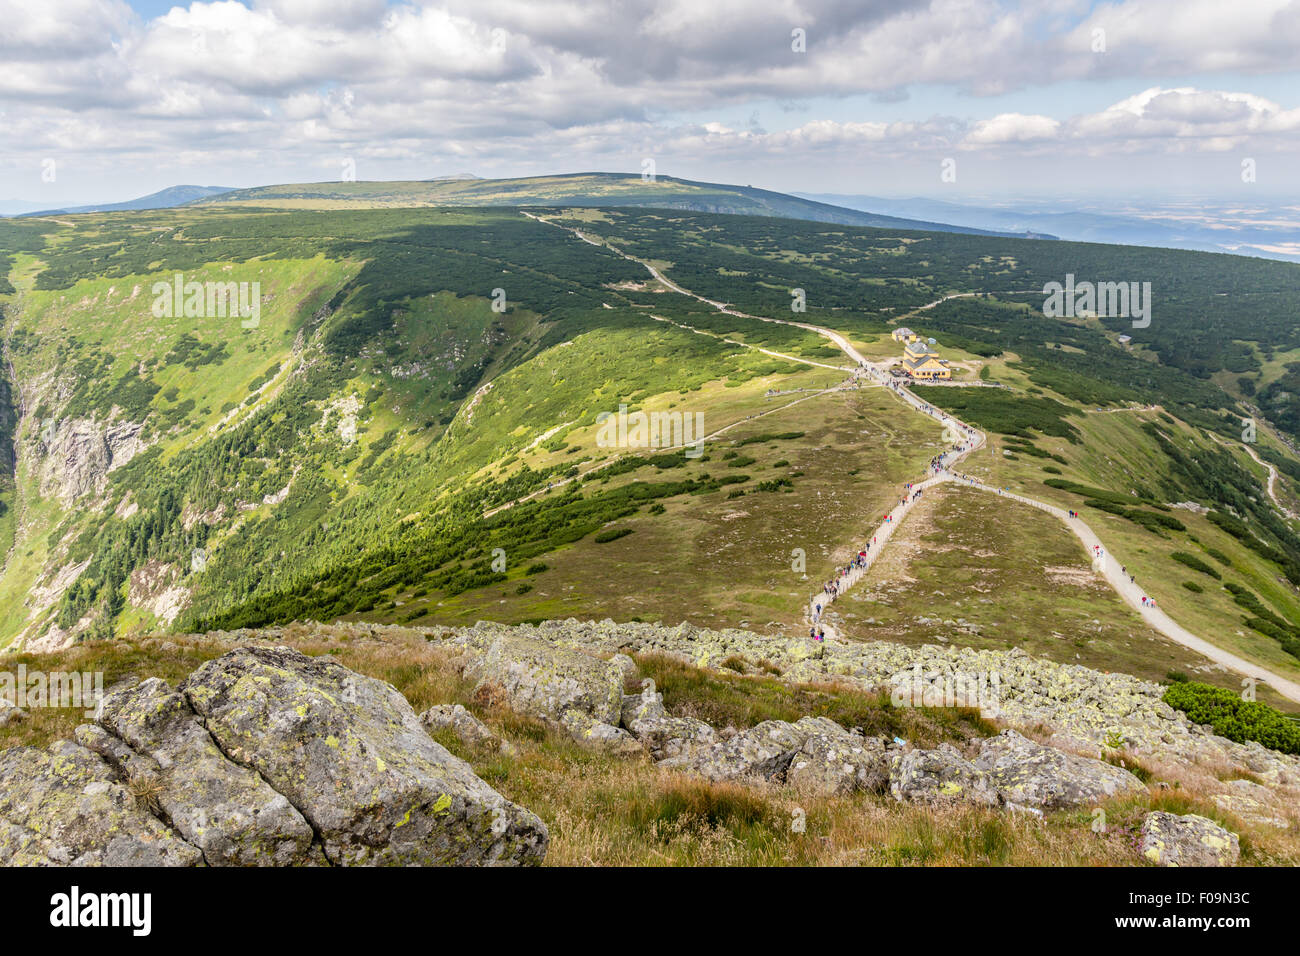 Landscape with mountains in national park Snezka / Sniezka - Krkonose / Karkonosze in Czech republic / Poland Stock Photo